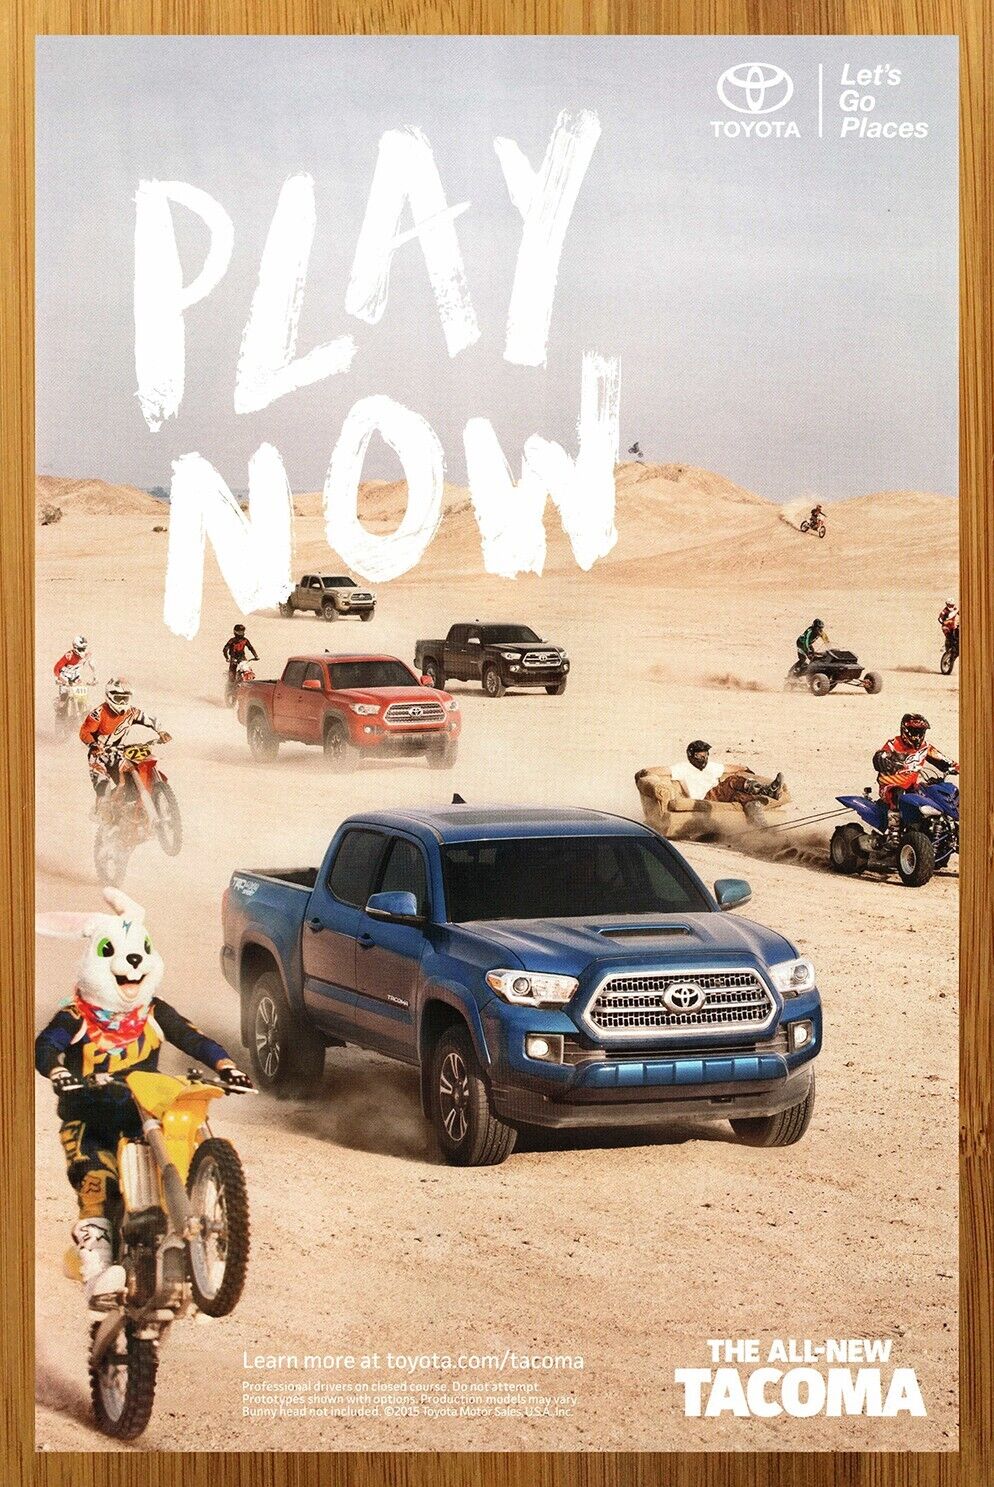 2015 Toyota Tacoma Print Ad/Poster Motorcycle Car Pickup Truck Man Cave Art 00s